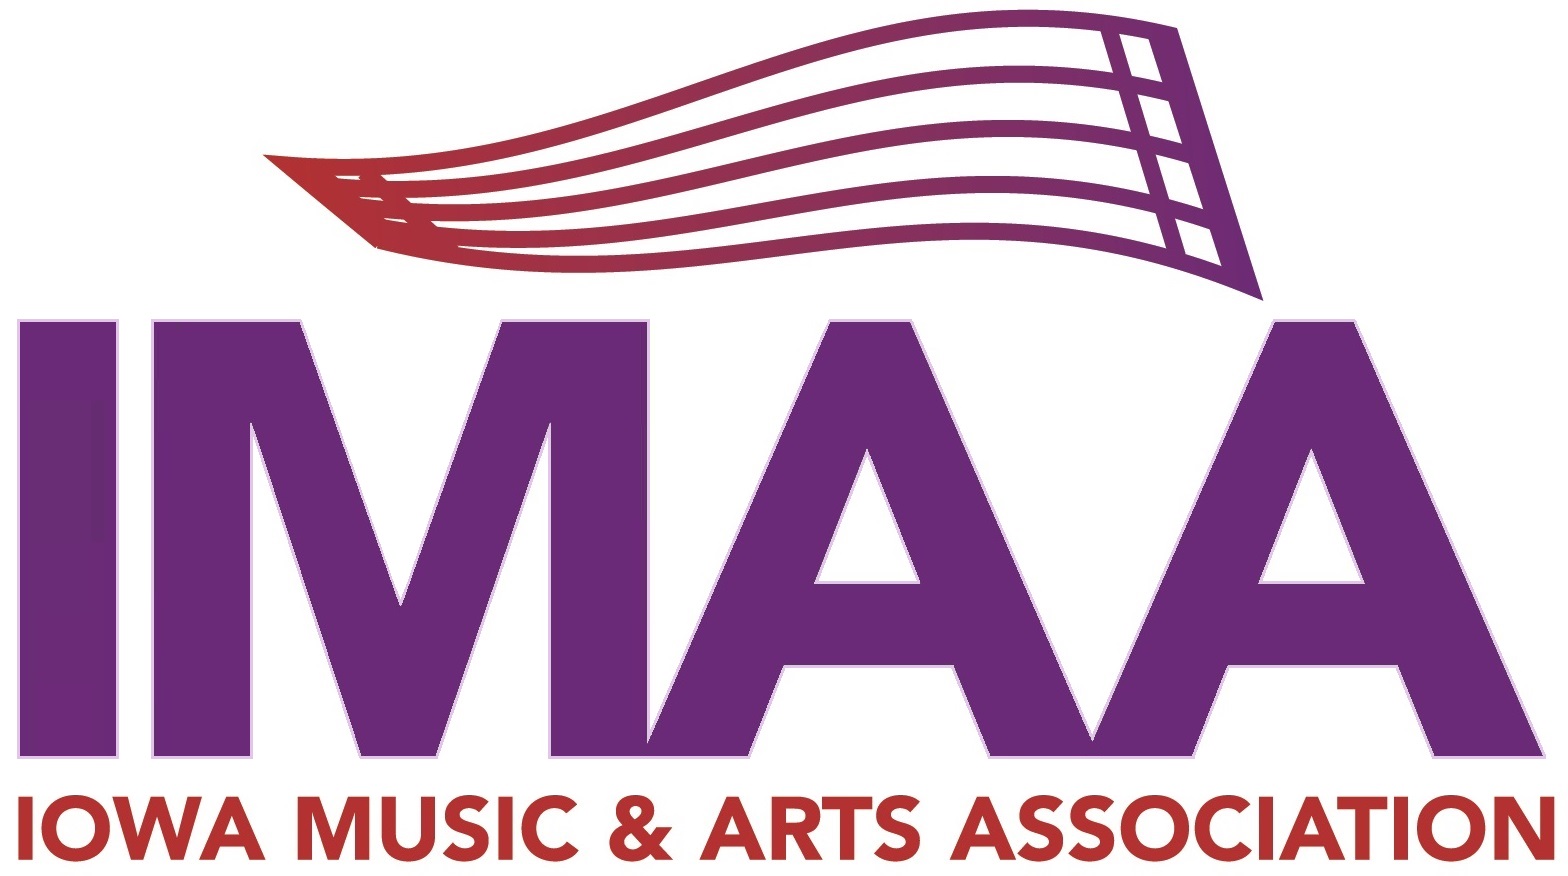 Iowa Music & Arts Association logo